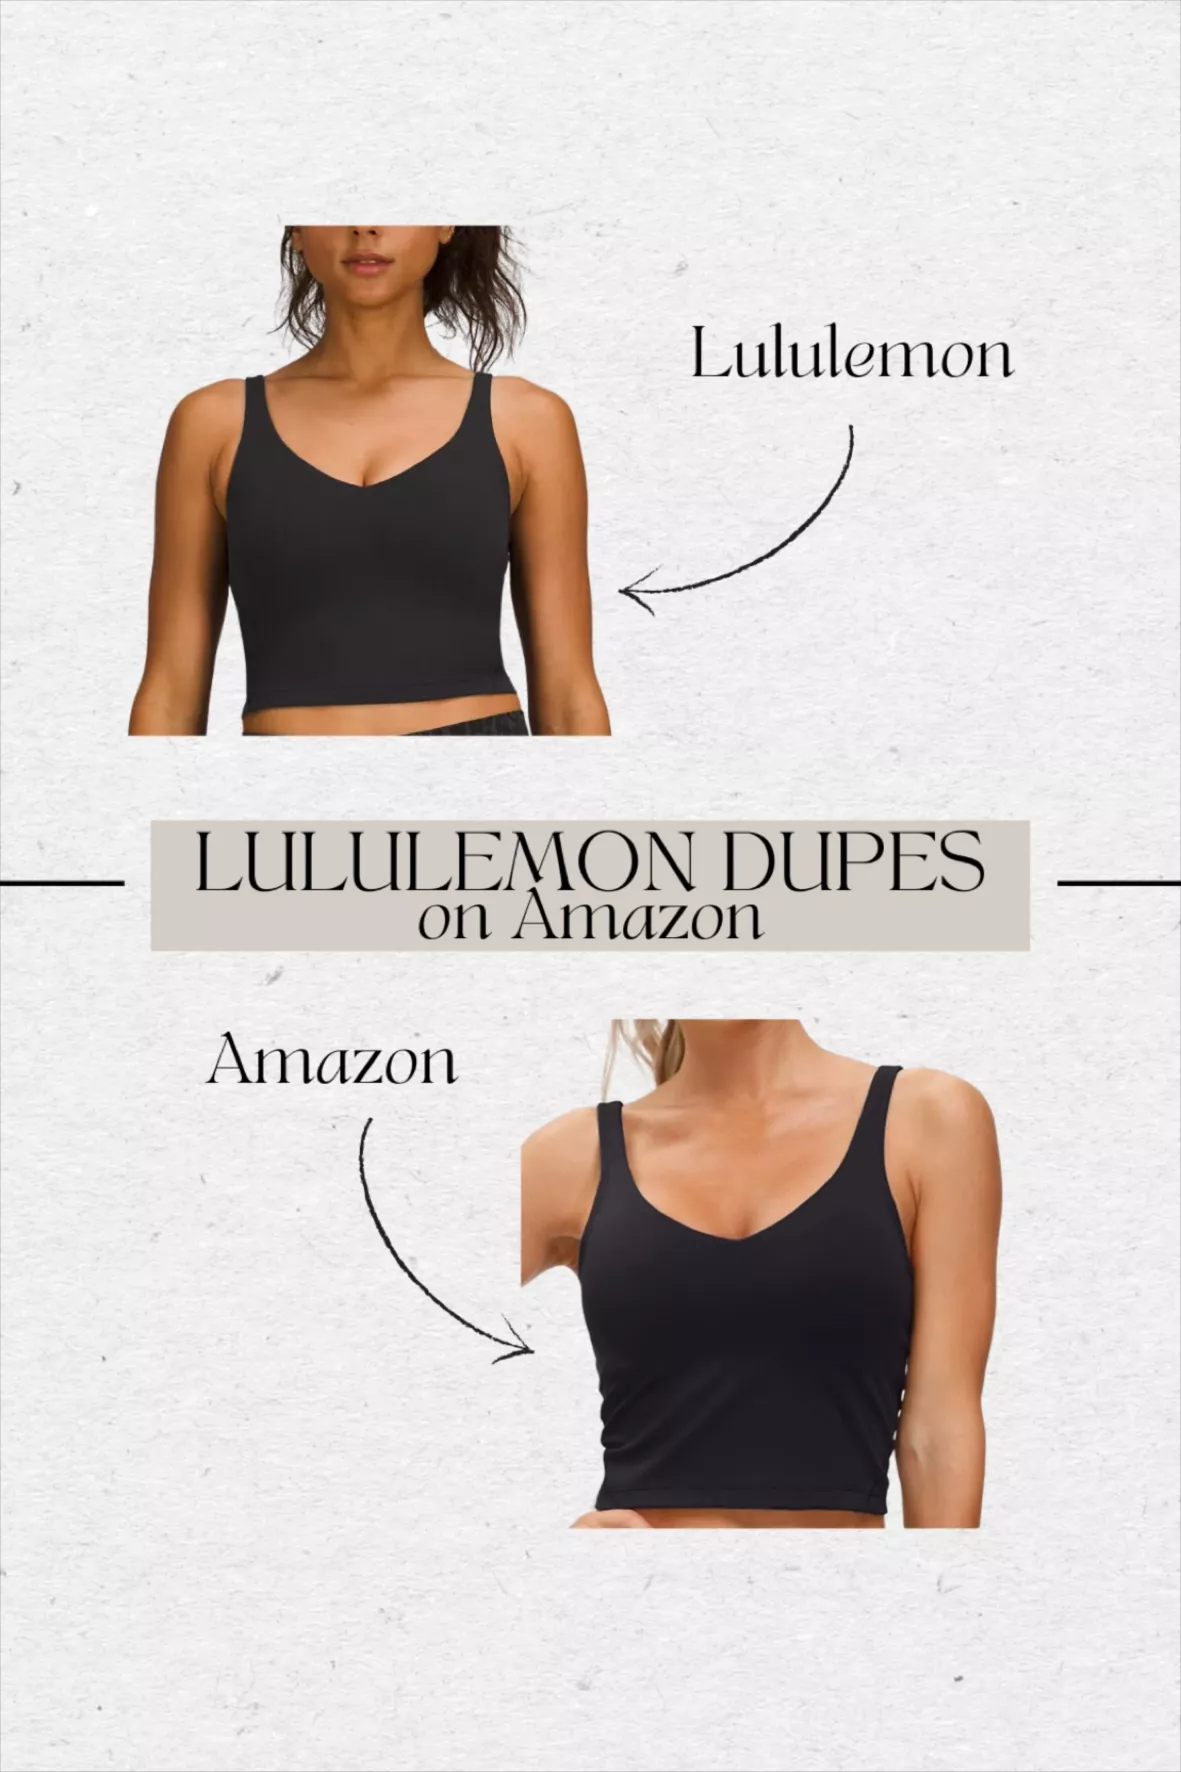 Lululemon Align Tank capture blue, Women's Fashion, Activewear on